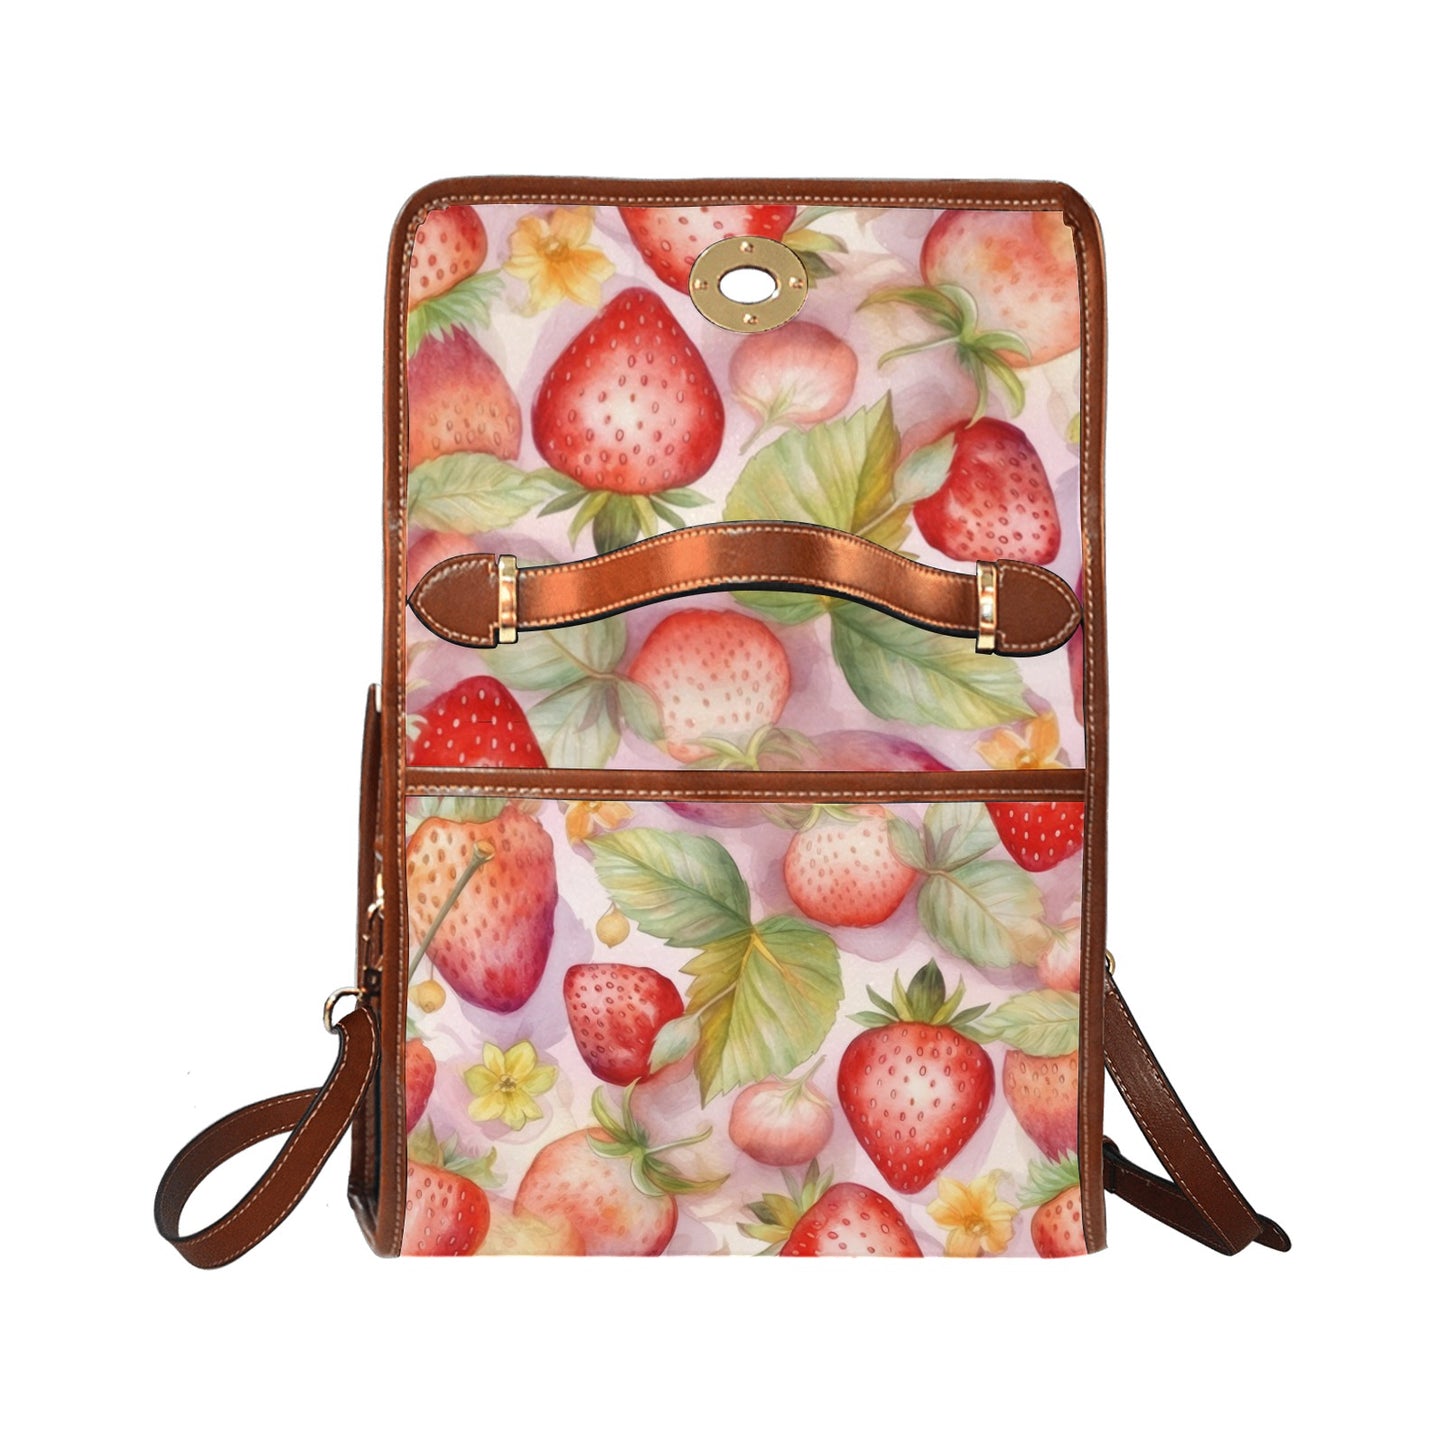 pink strawberries purse handbag shoulderbag